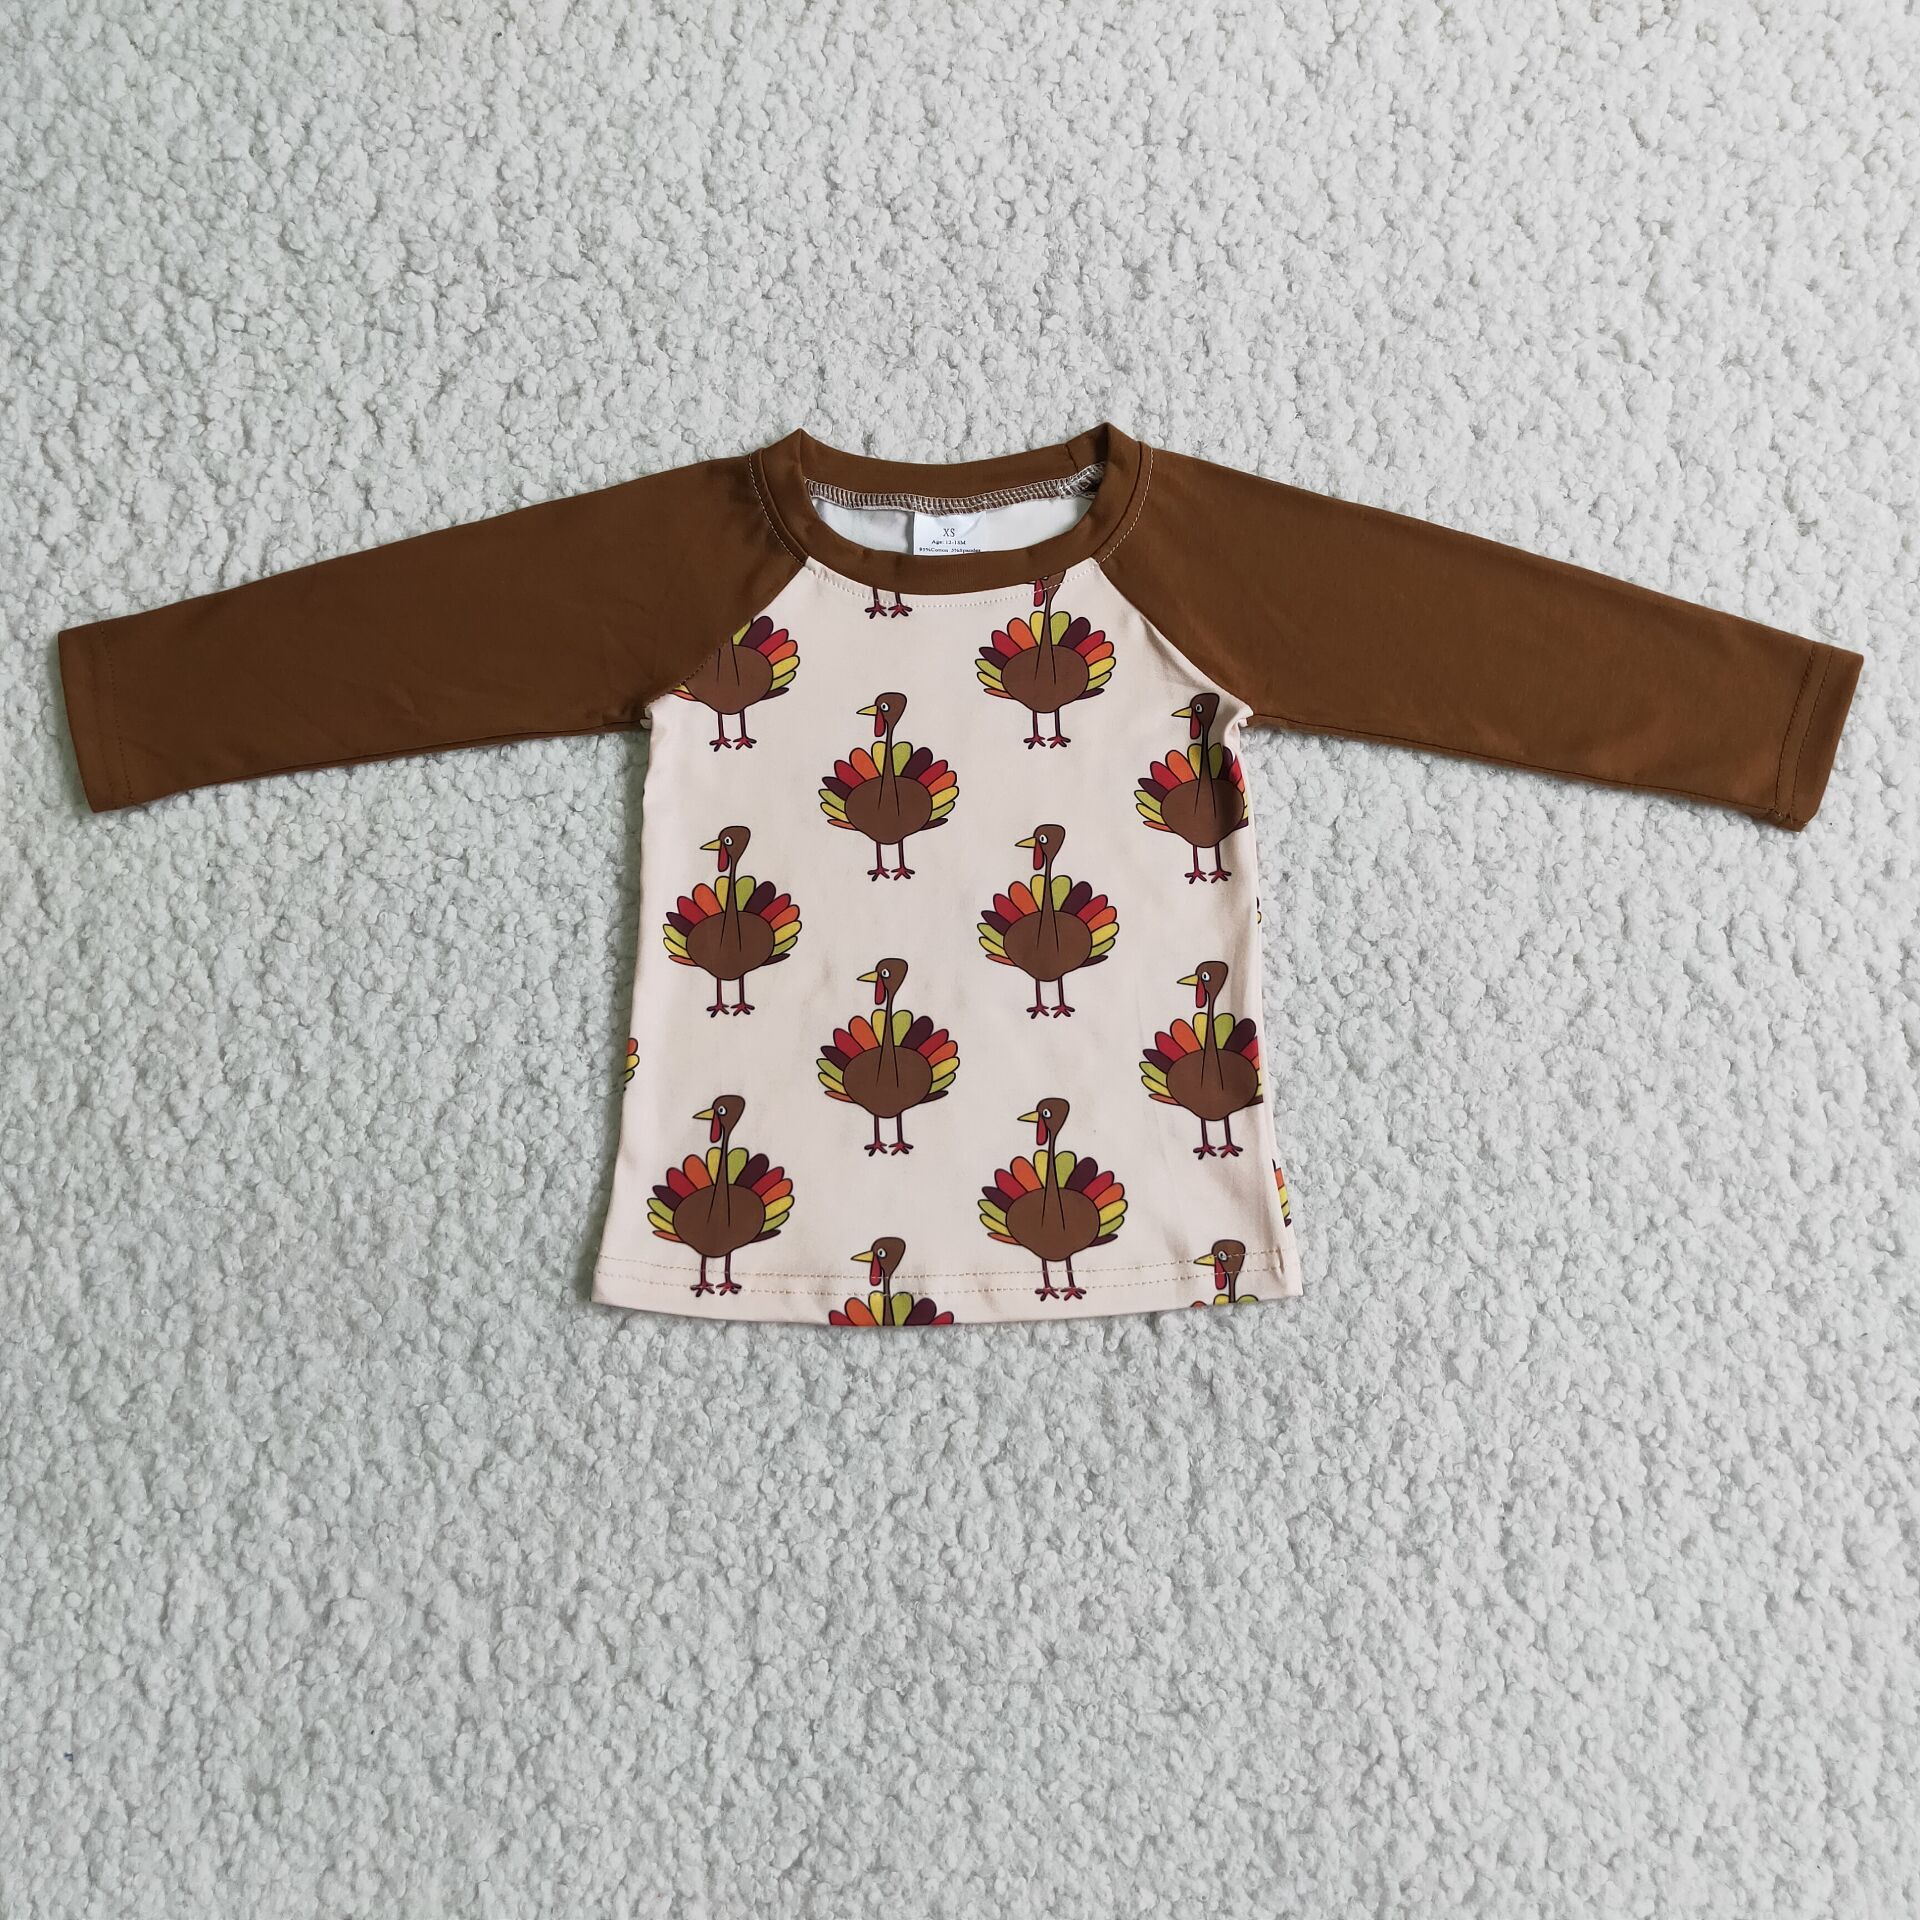 6 C6-34 boy thanksgiving clothes turkey brown shirt top - promotion 2023.10.14